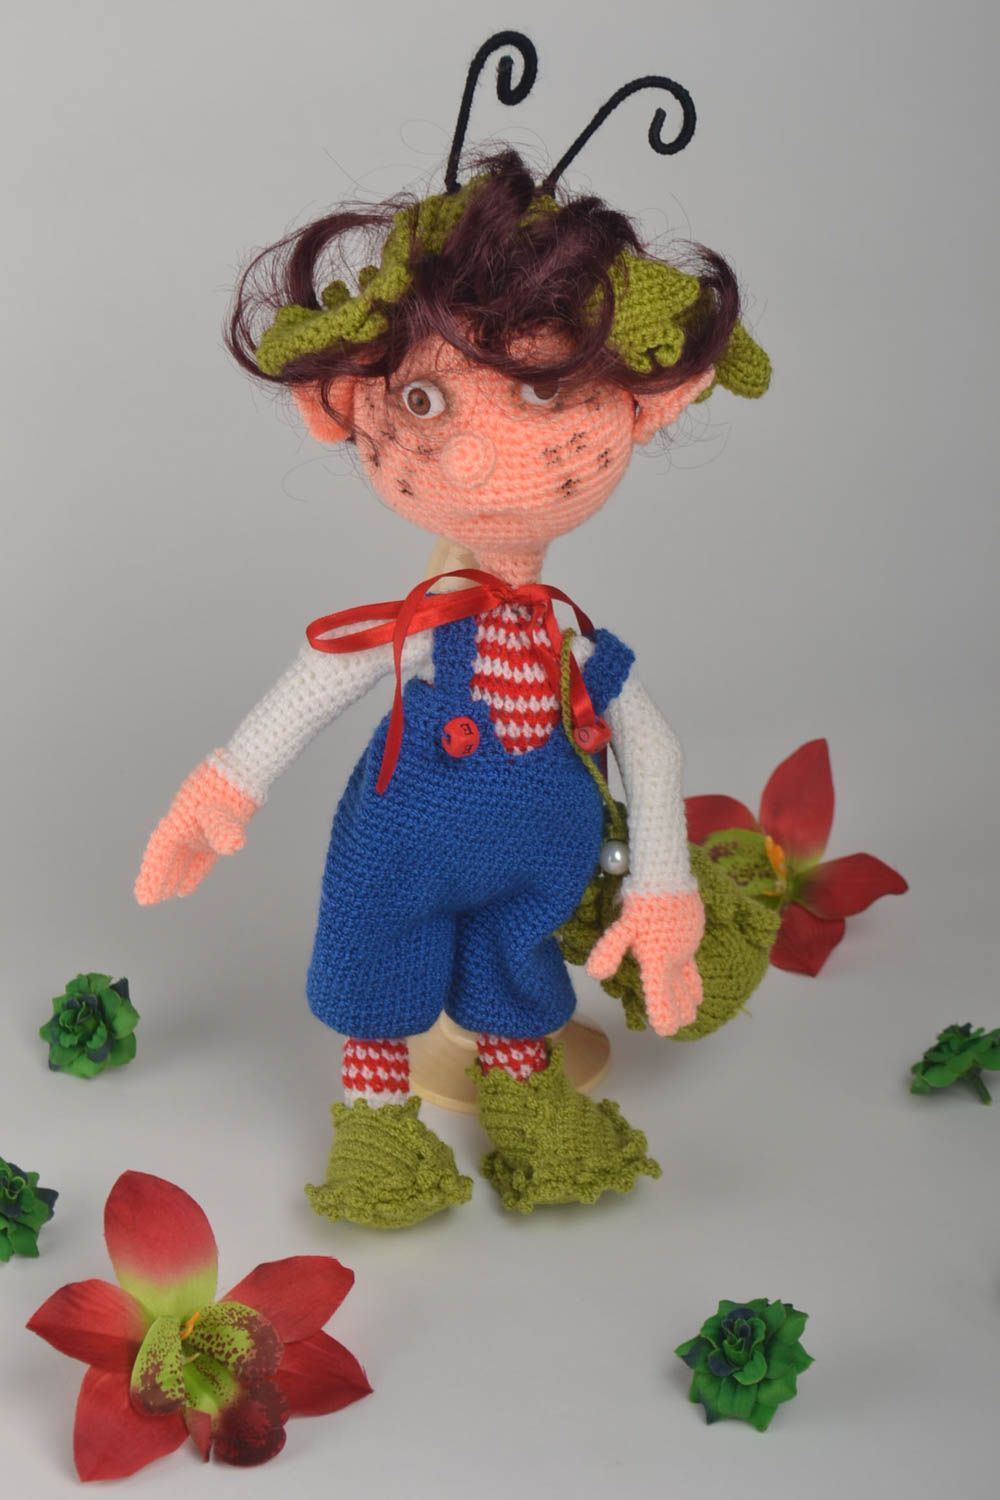 Handmade doll crochet toy gifts for kids nursery decor classic toys photo 1